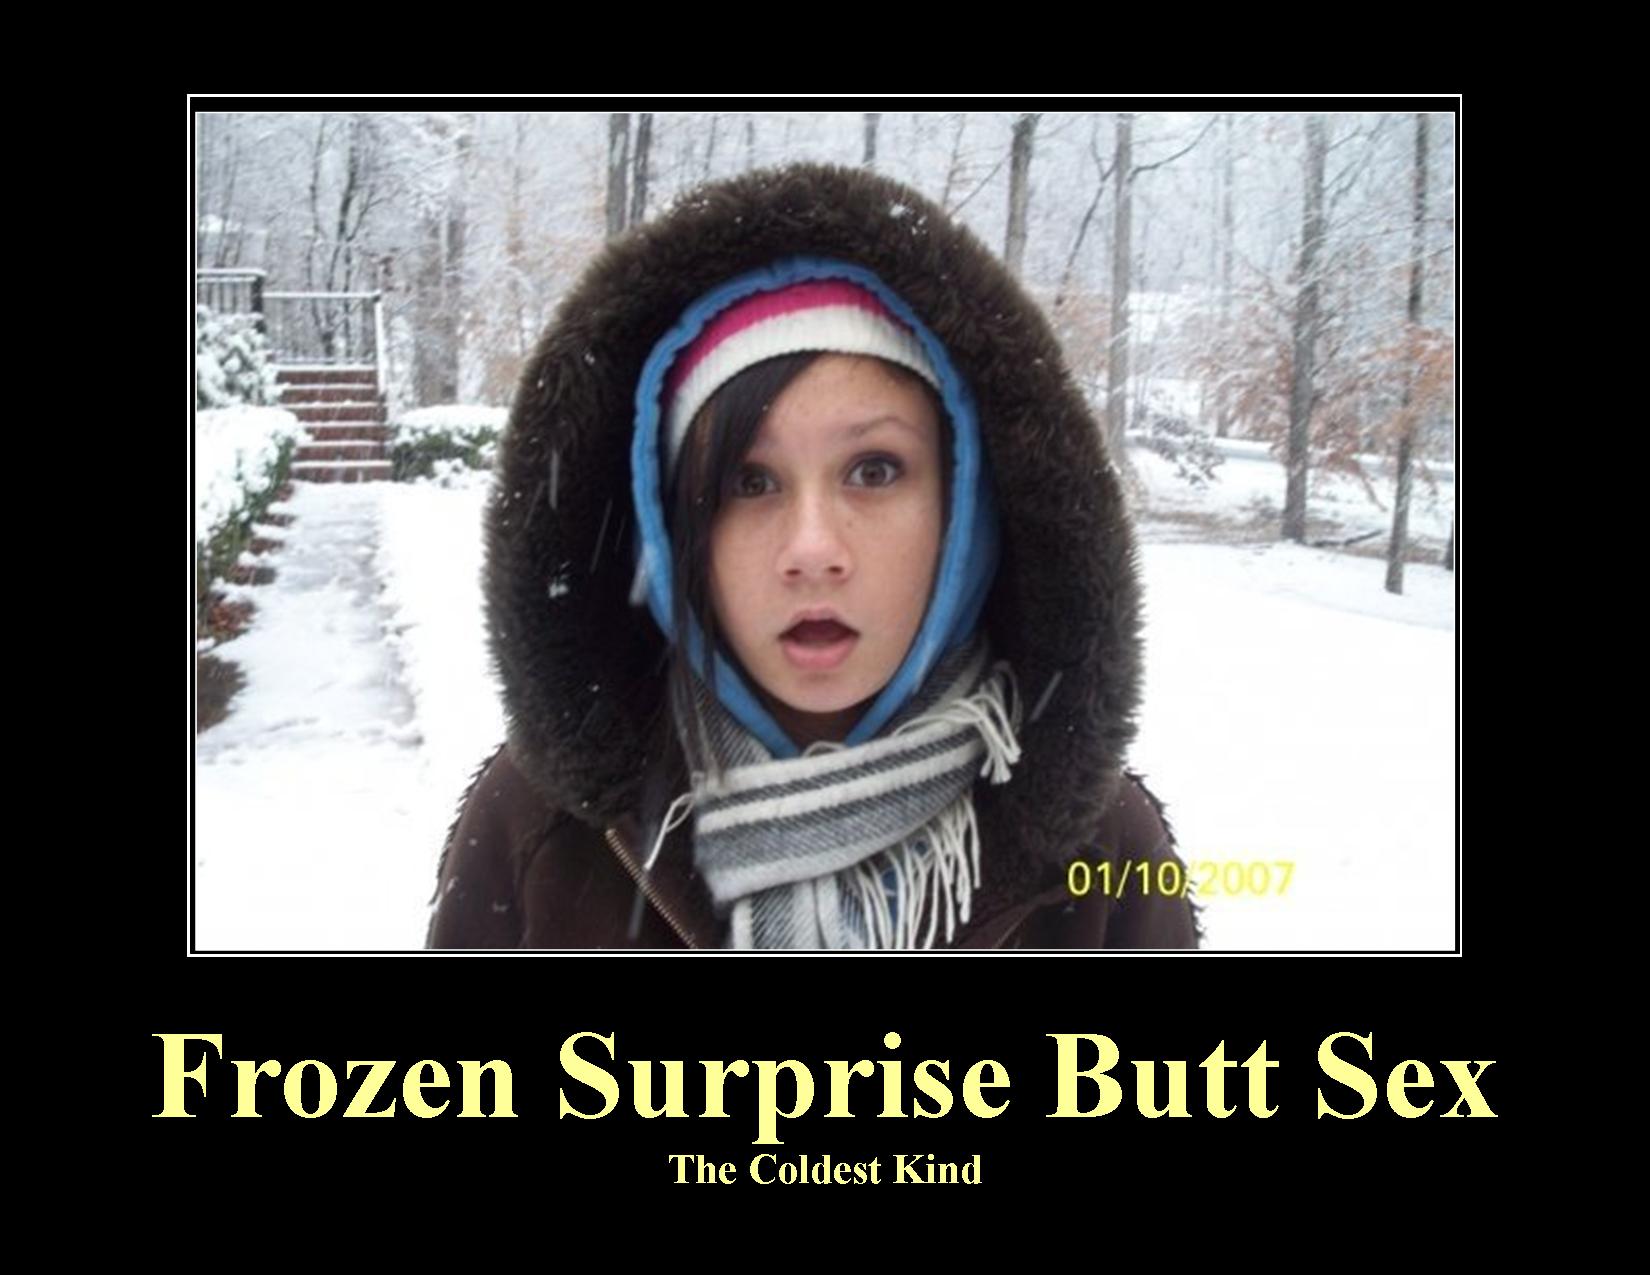 Sex Demotivational Posters - Frozen Surprise Butt Sex - Picture | eBaum's World